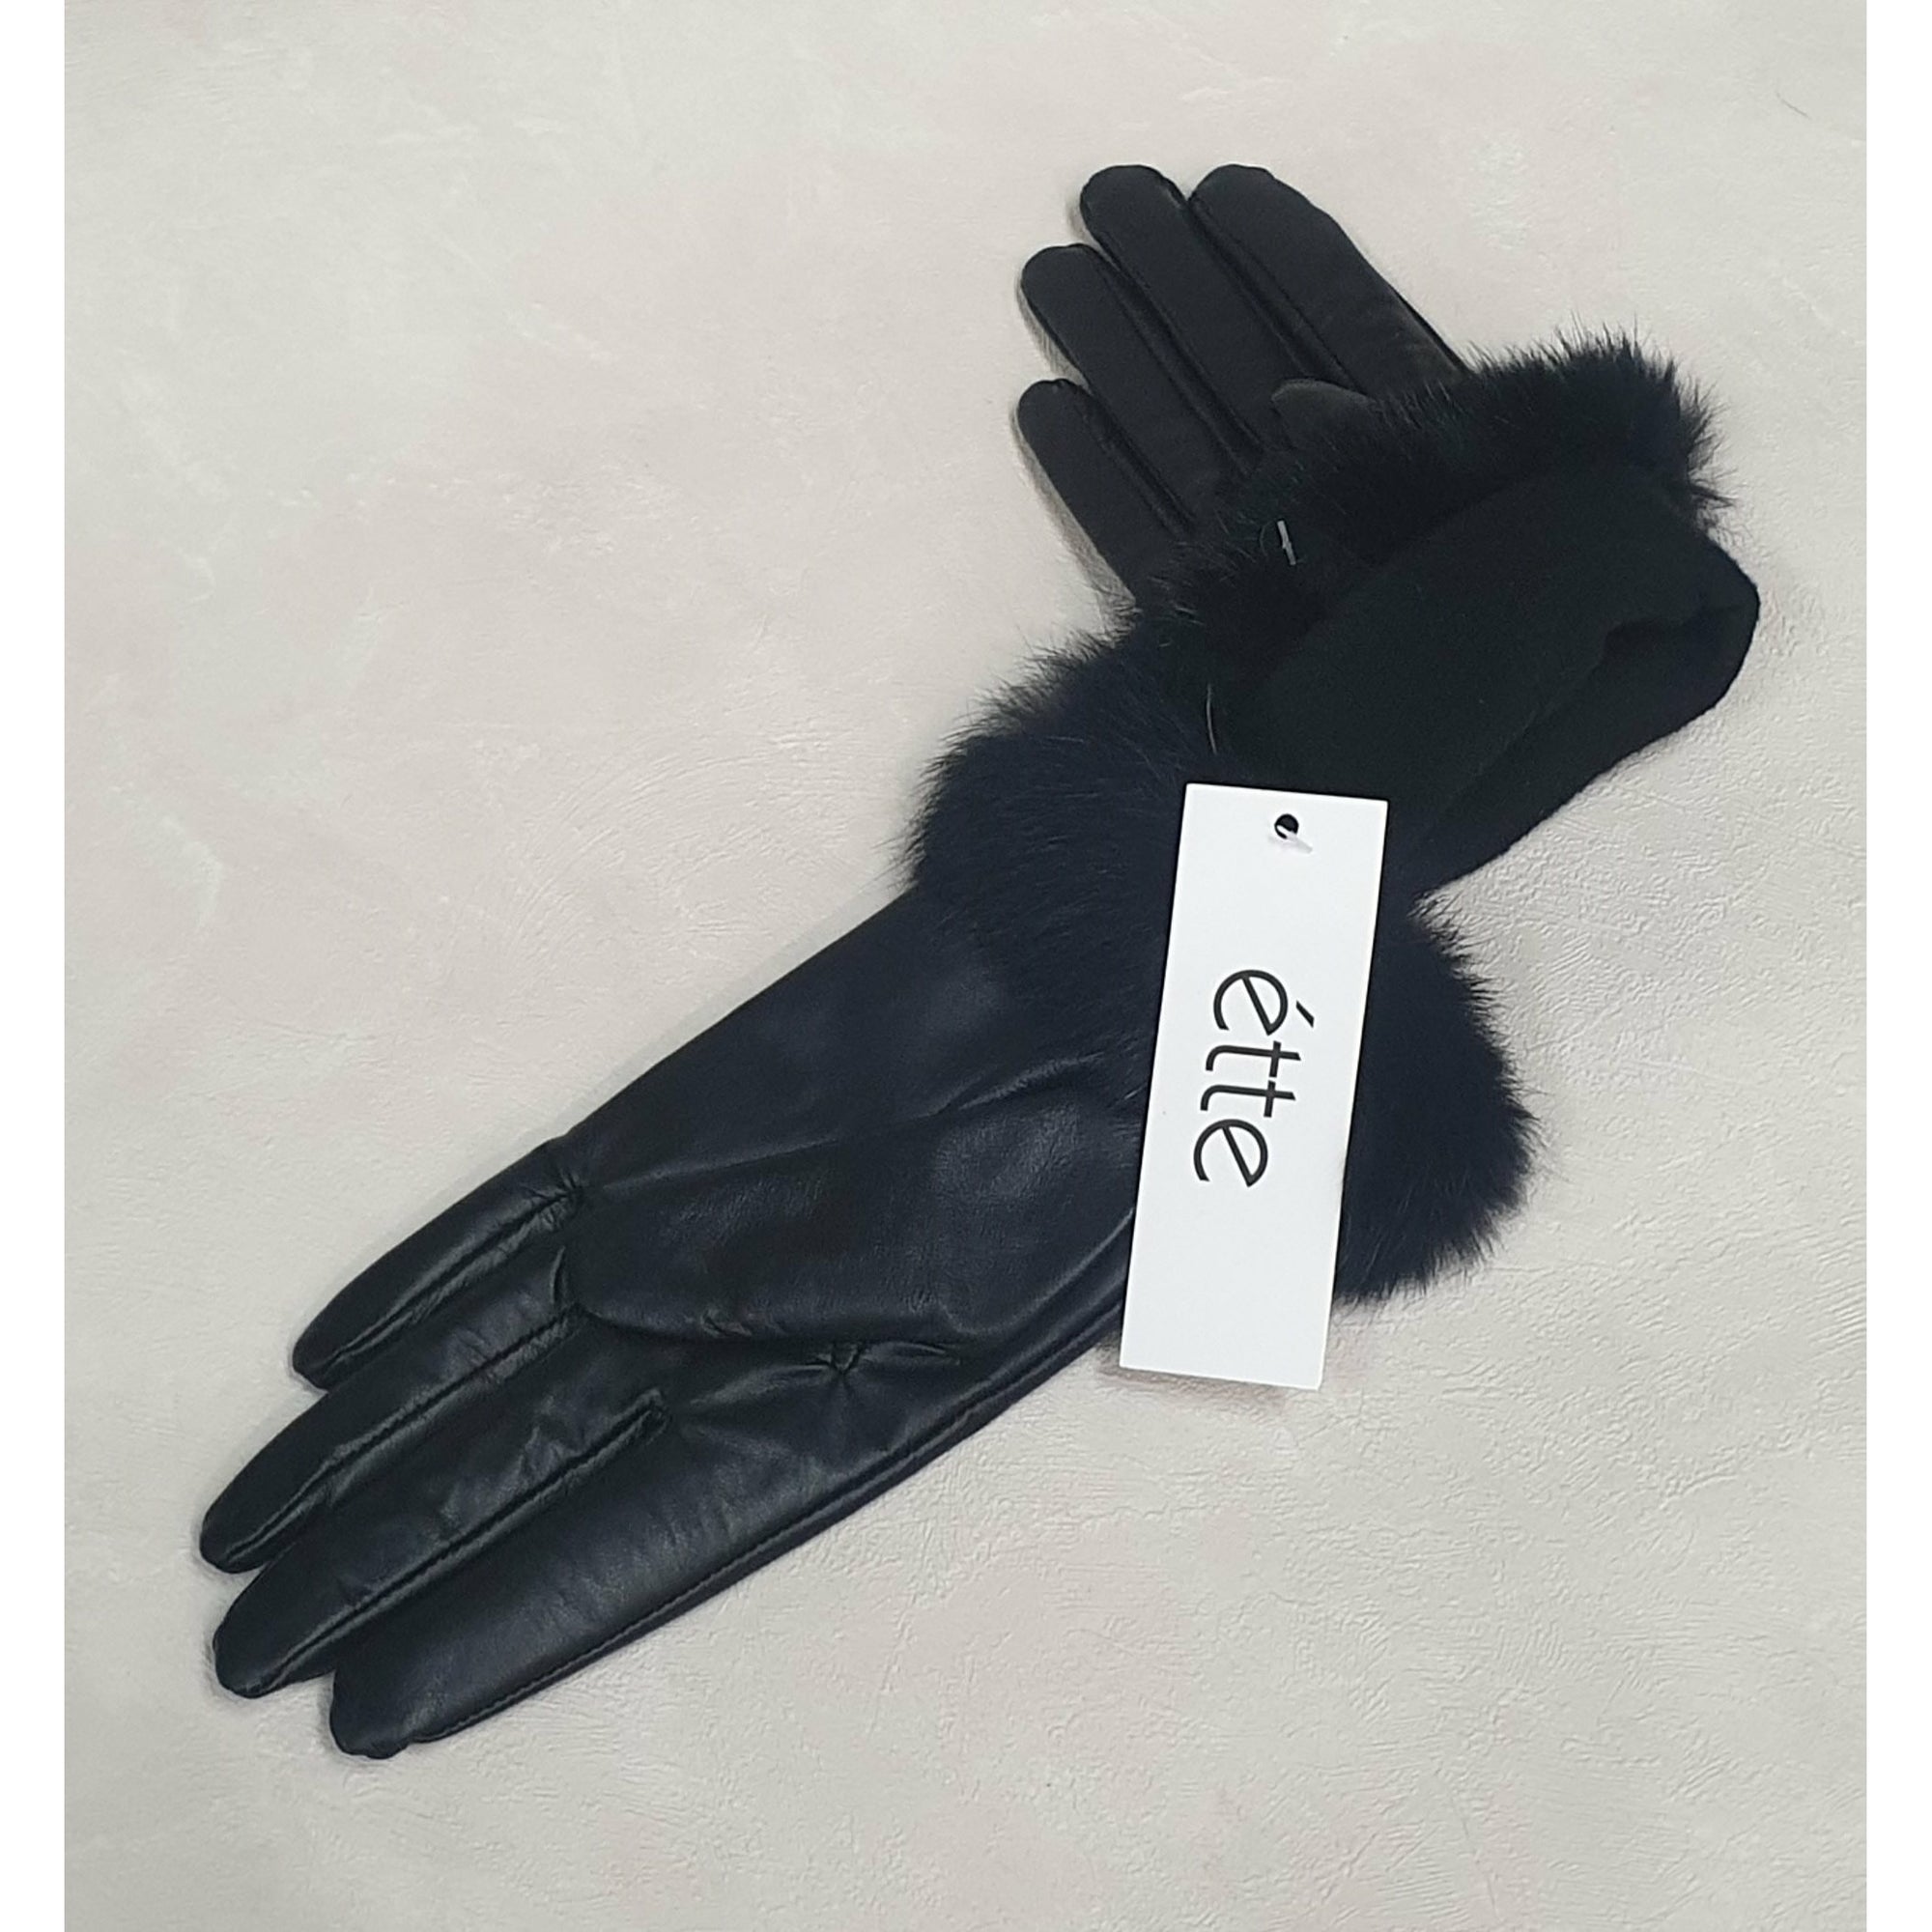 Leather Gloves - Rabbit Fur Trim -Black Size Medium Not specified